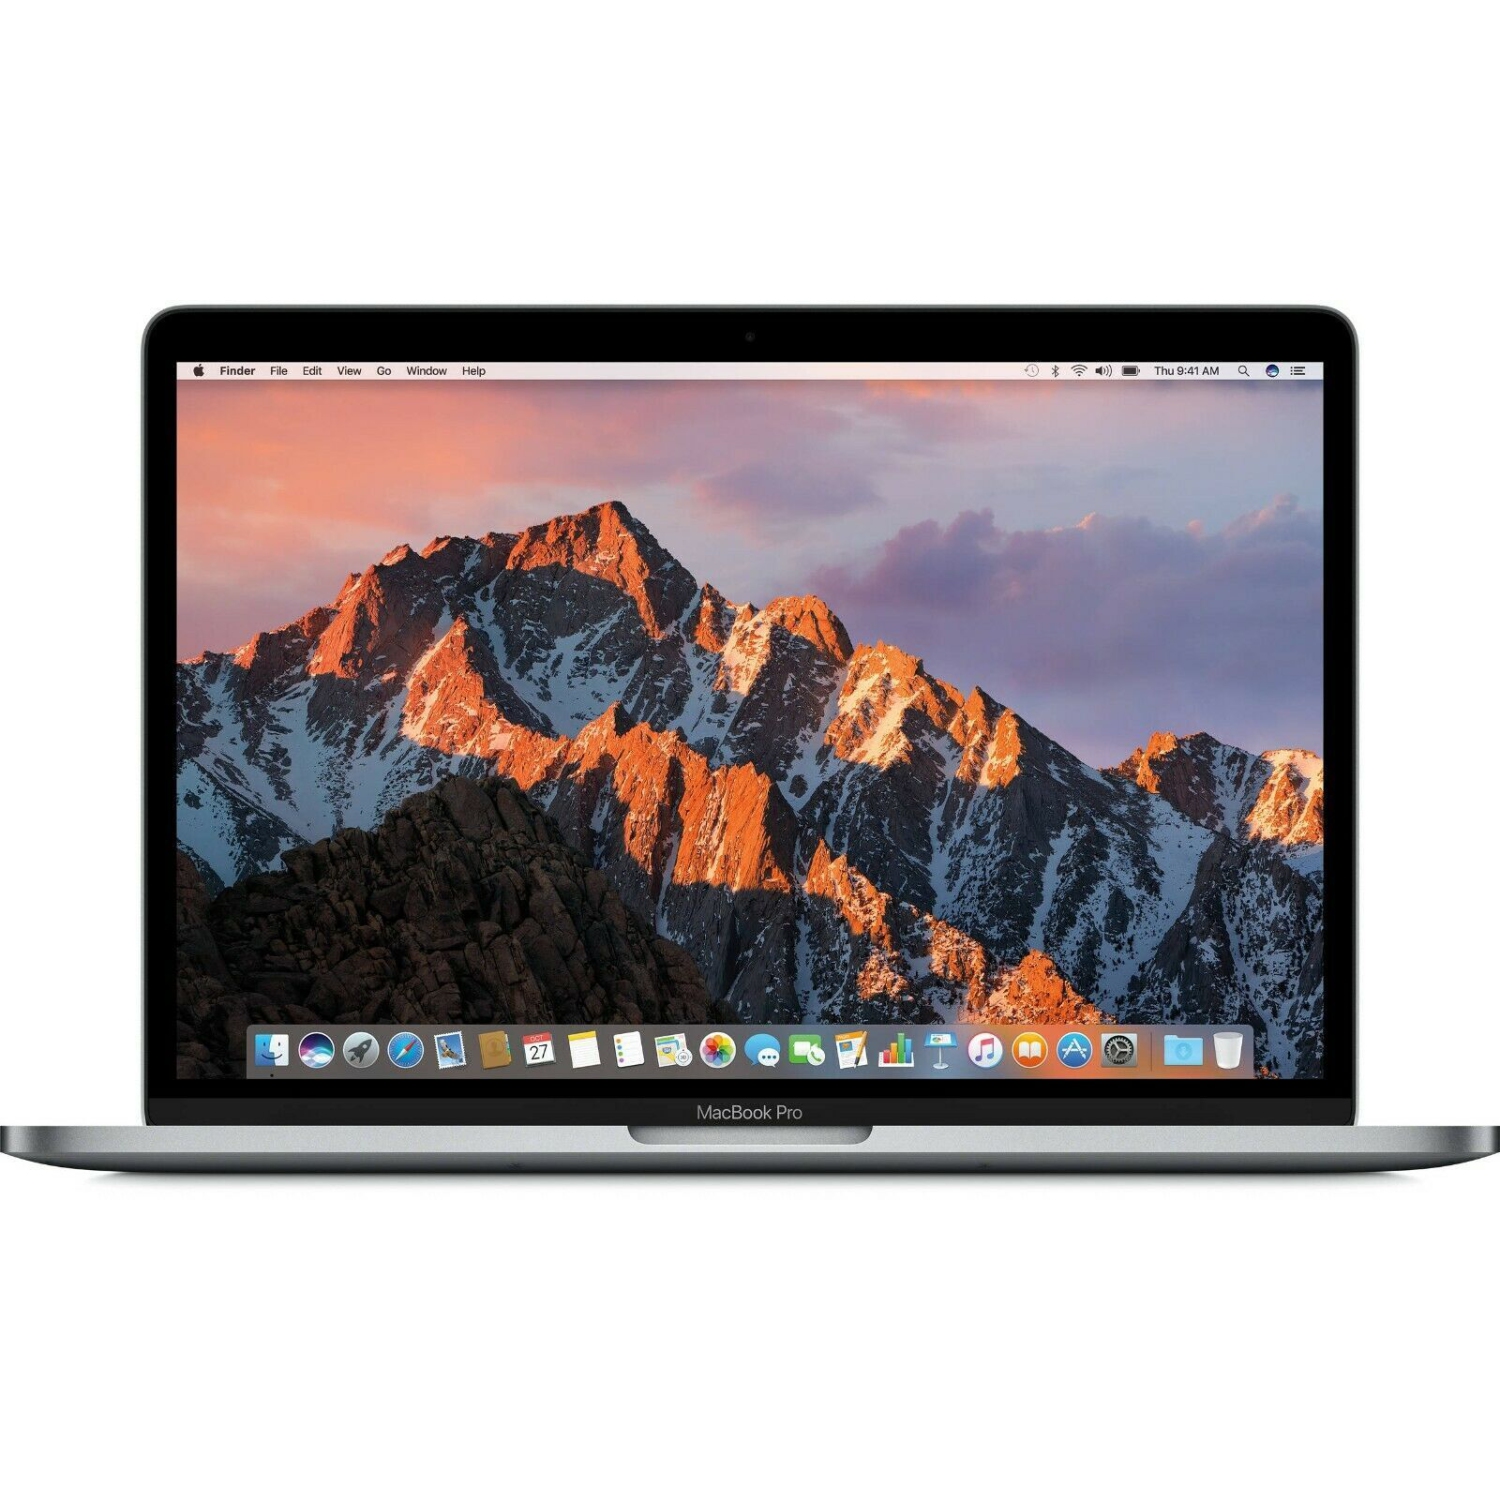 Apple MacBook Pro 2019, 15" Retina Display, Intel i7-9750H @ 2.6GHz, 16GB RAM, 256GB NVME, Certified Refurbished